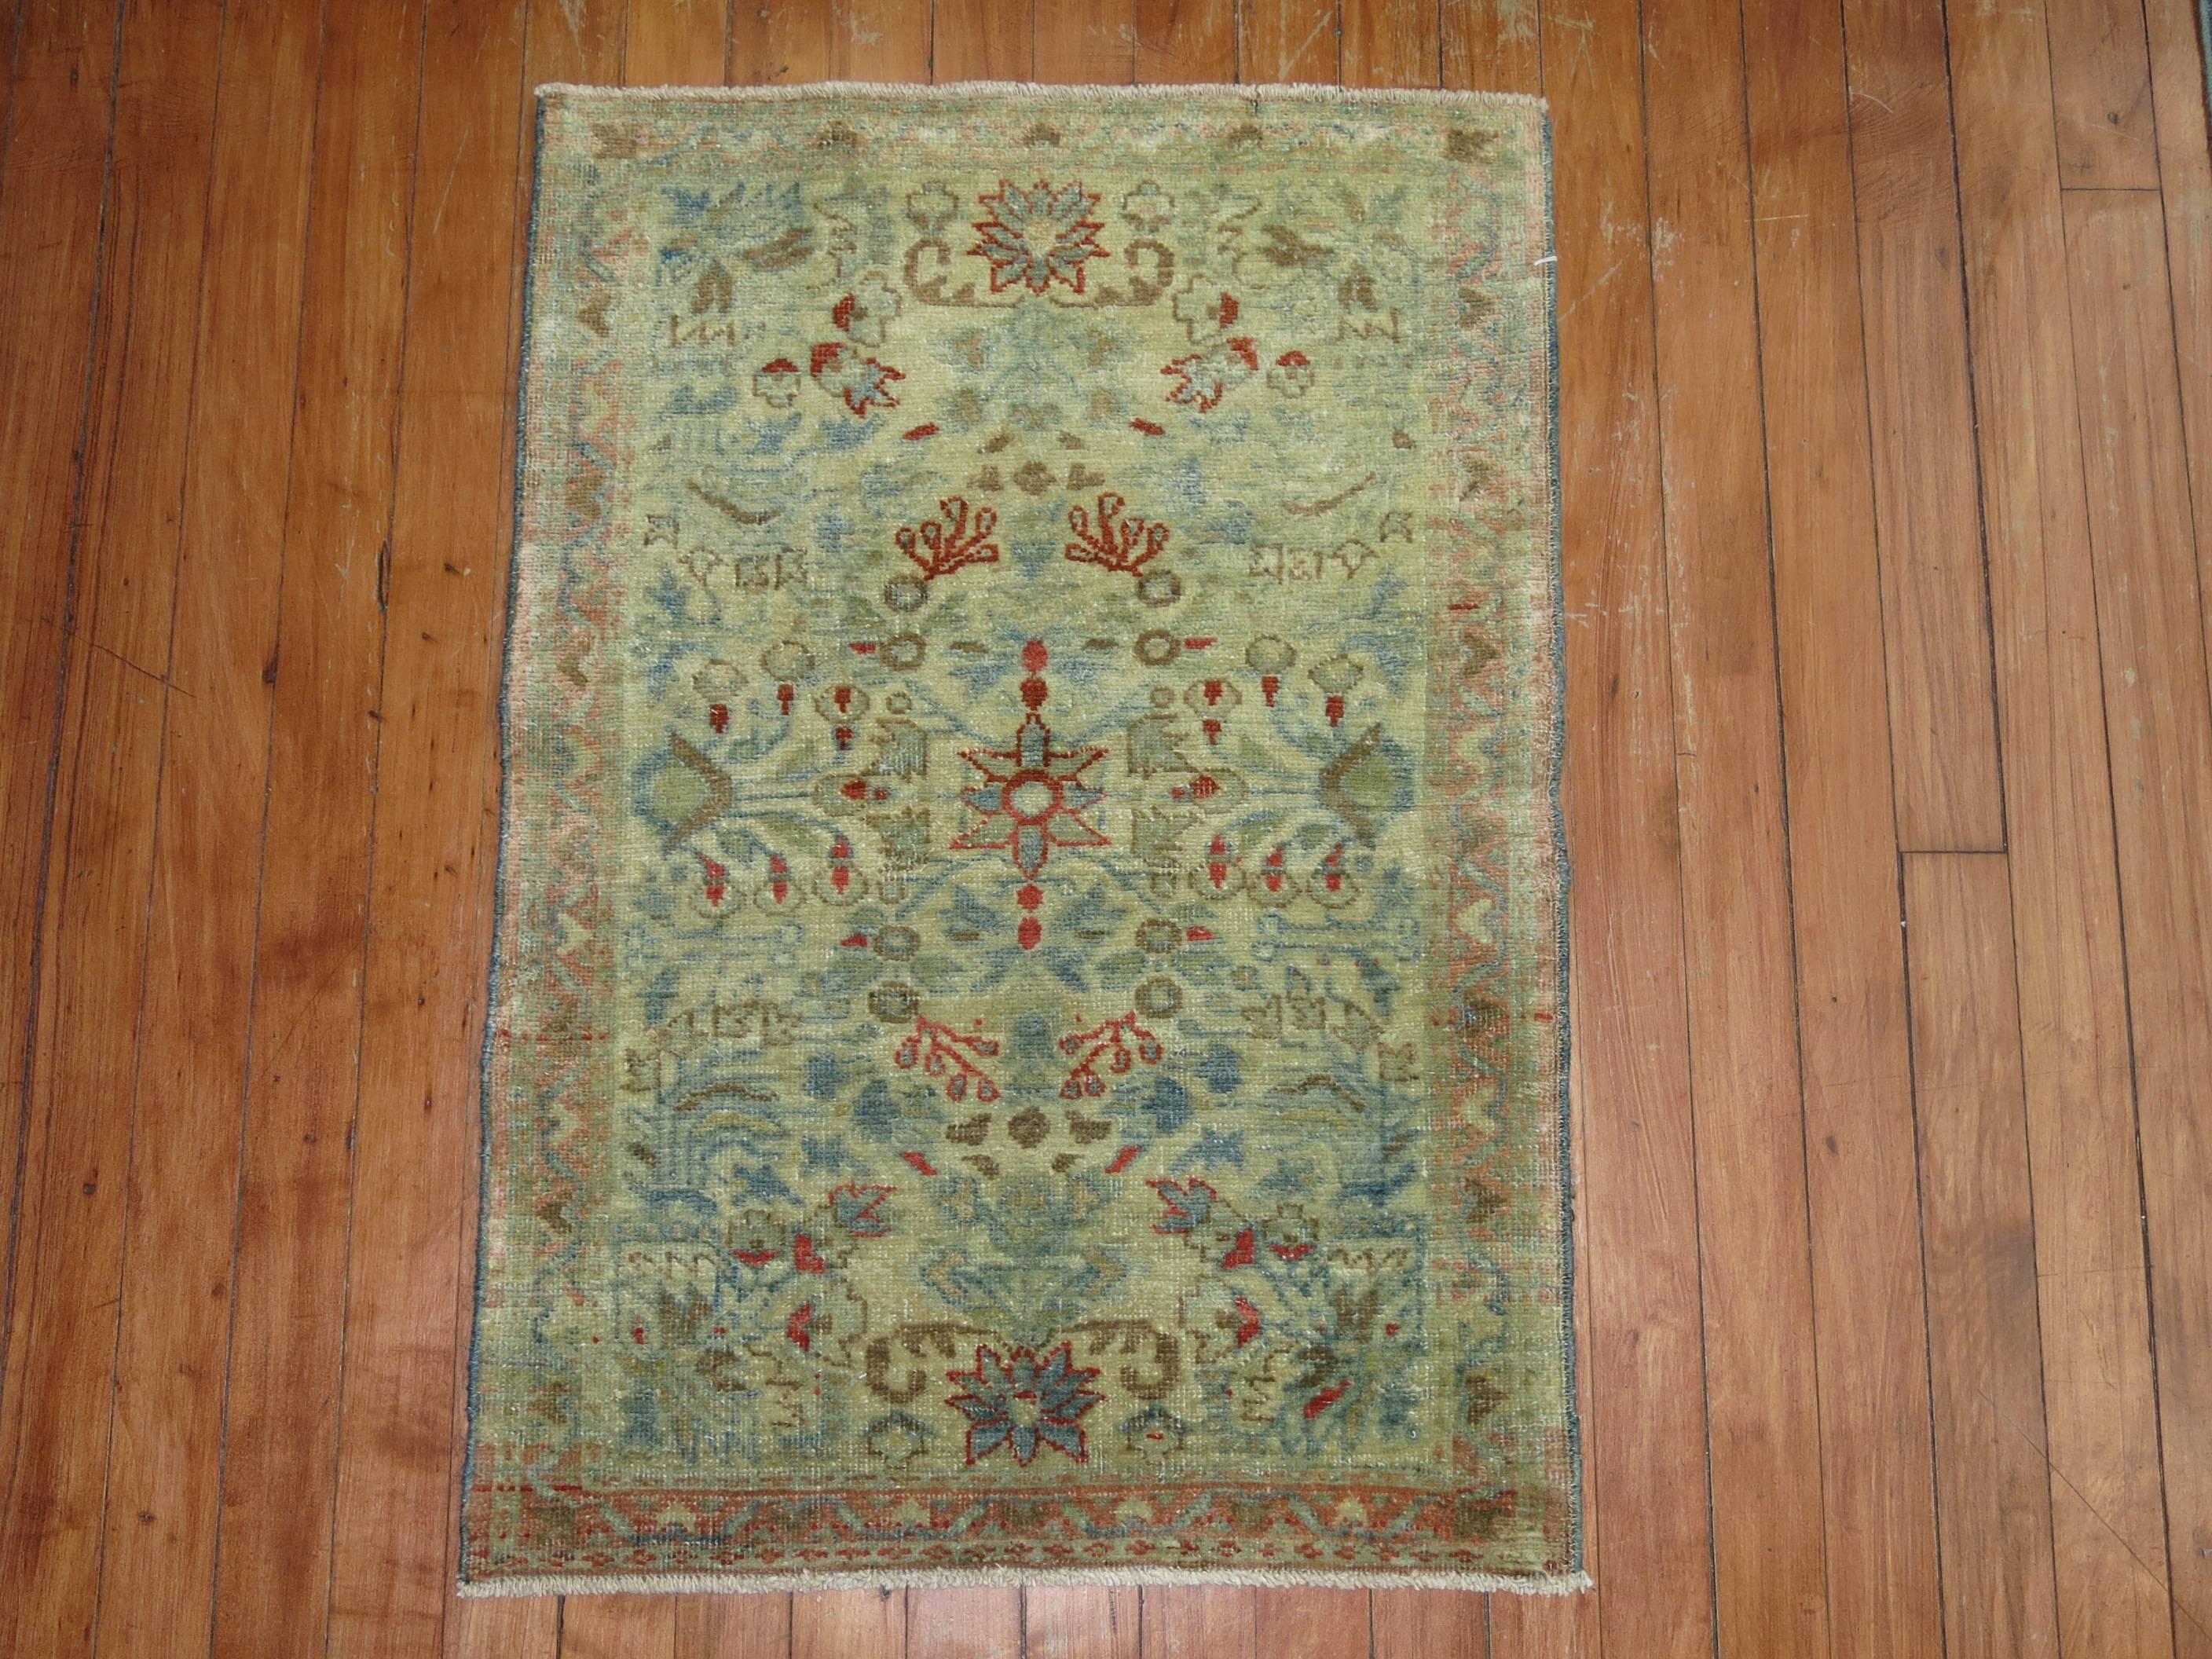 An early 20th century Persian rug mat in sea foam colors

1'10'' x 2'8''